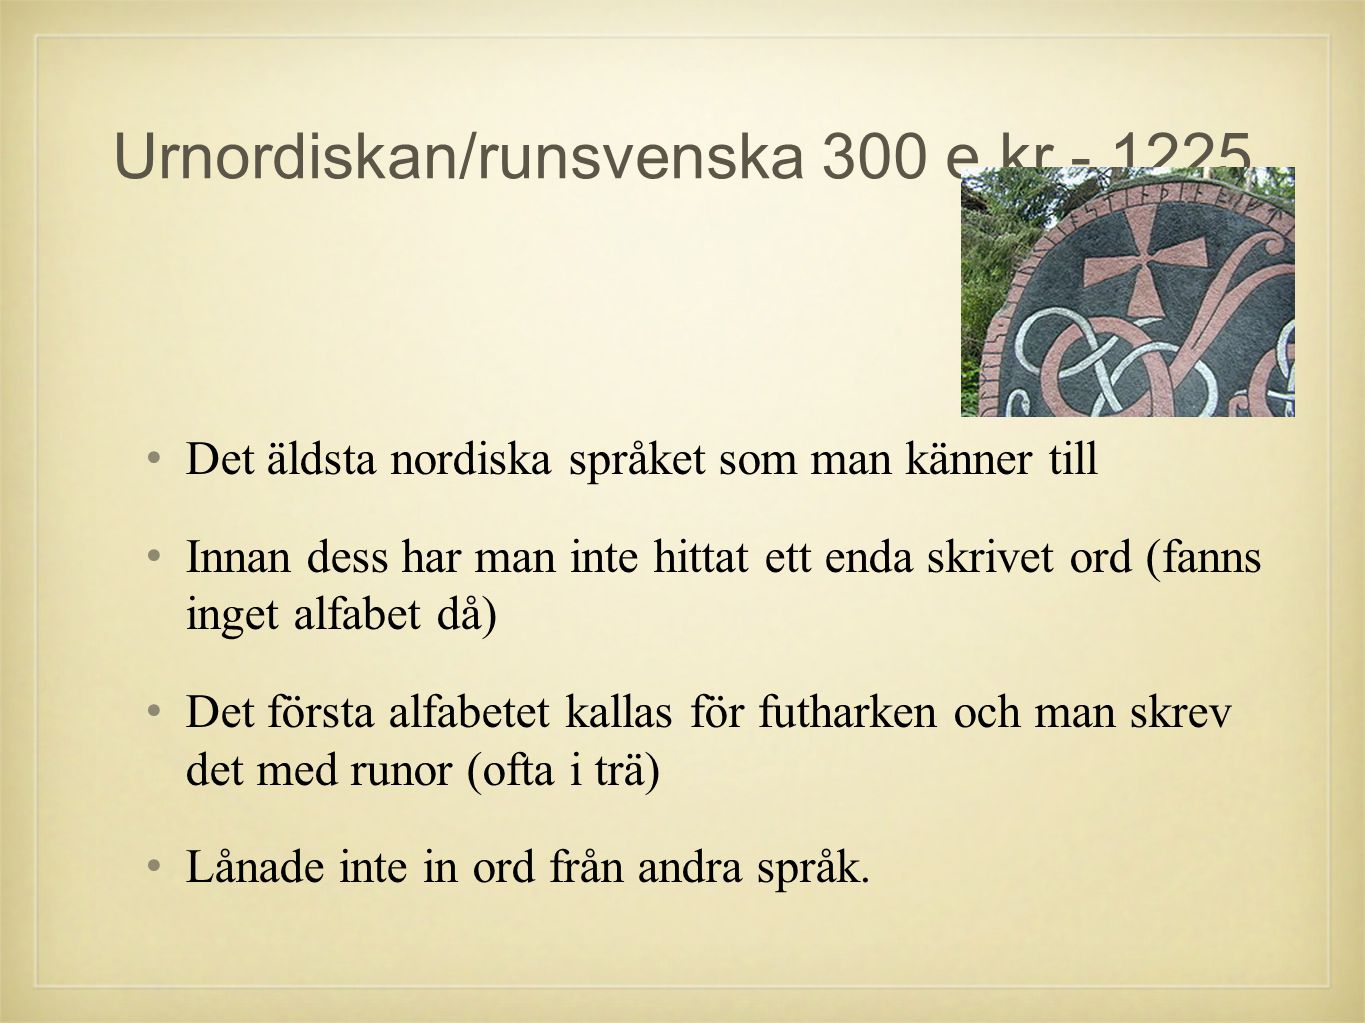 Urnordiskan/runsvenska 300 e.kr